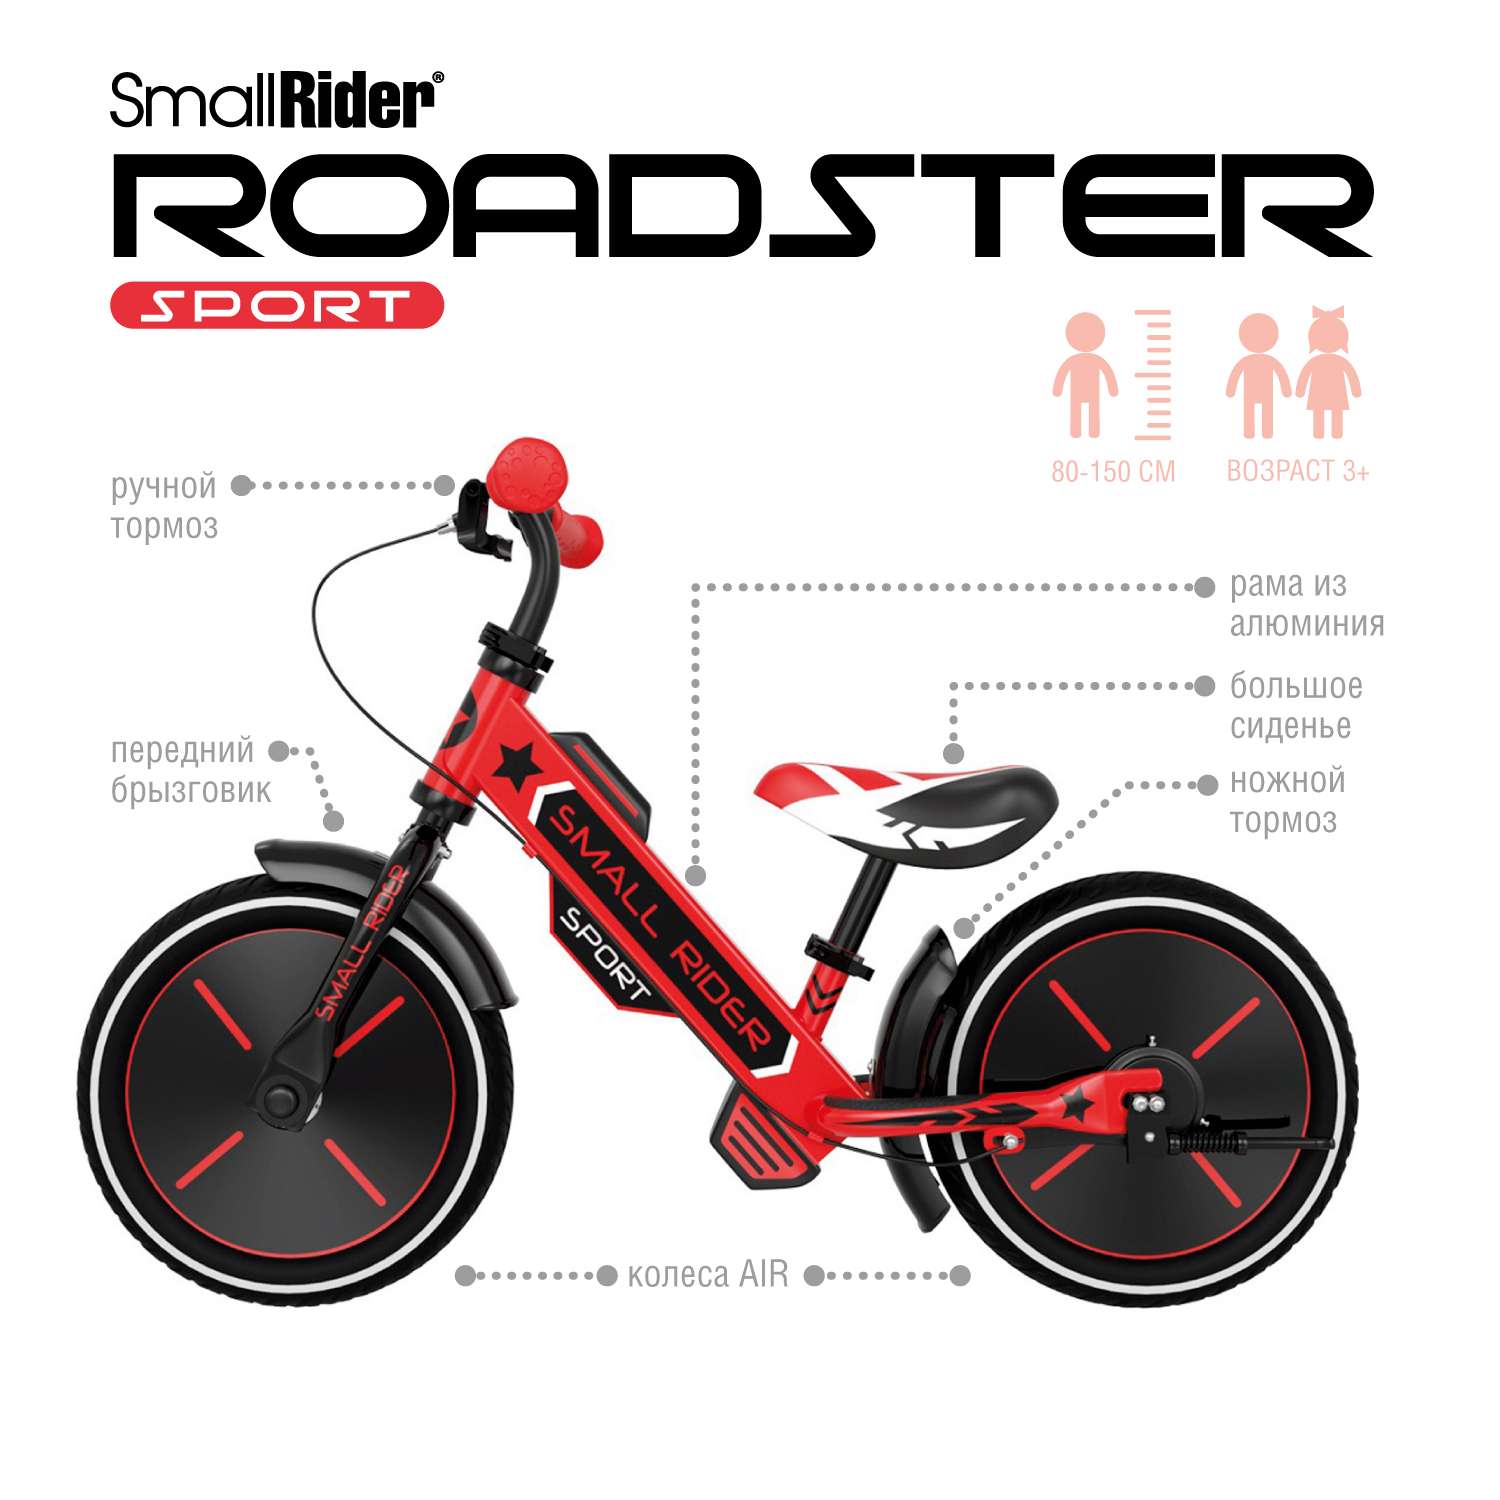 Беговел Small Rider Roadster Sport Air красный - фото 2